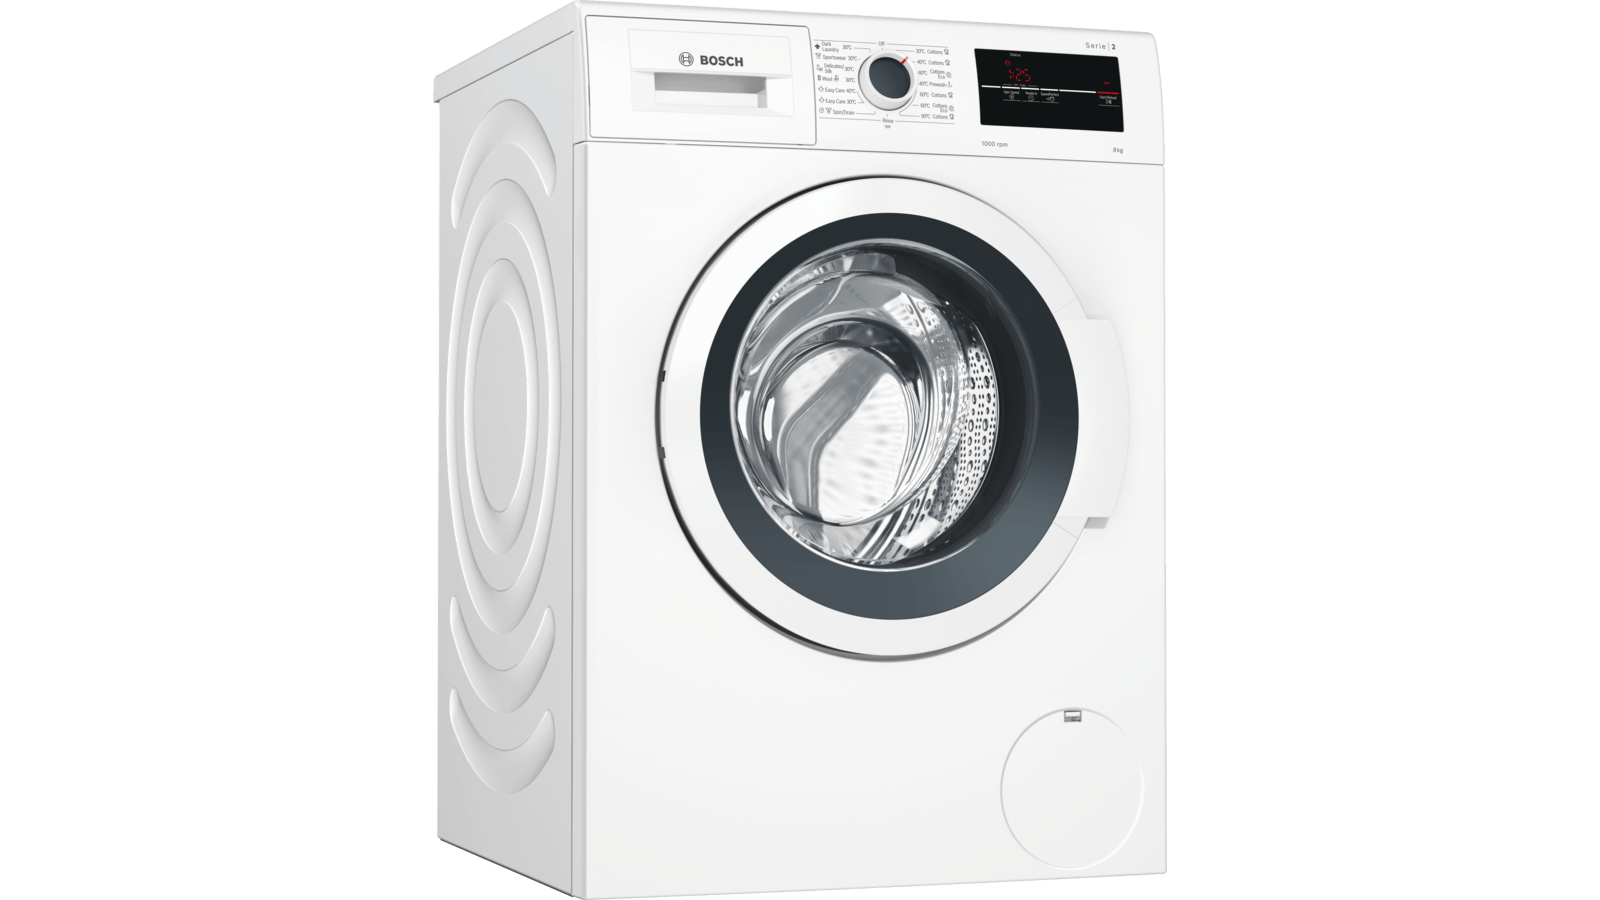 Bosch Washing Machine Background PNG Image